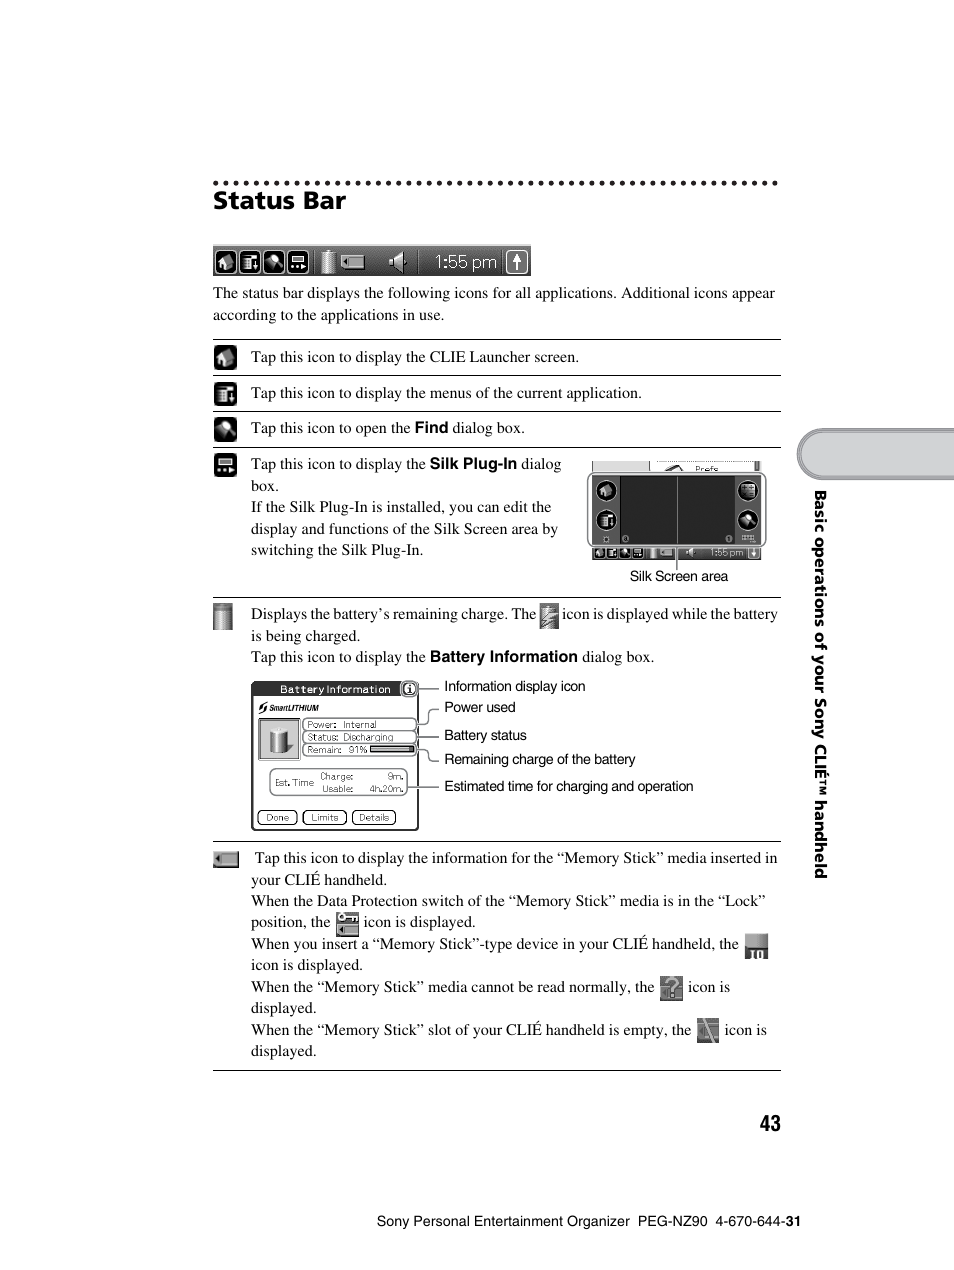 Status bar | Sony PEG-NZ90 User Manual | Page 43 / 115